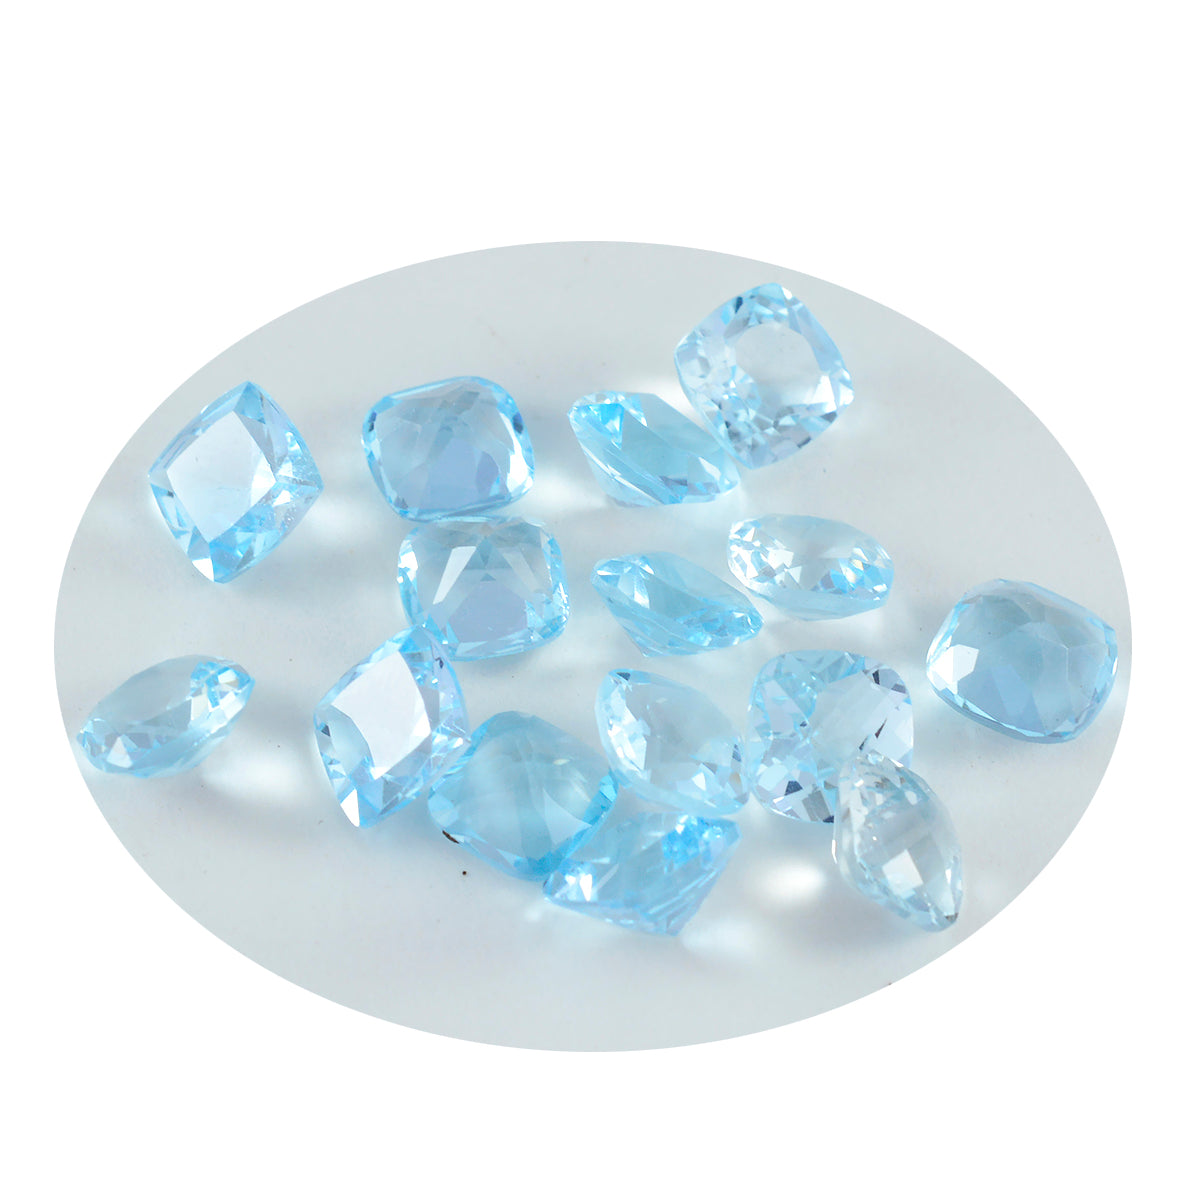 Riyogems 1PC Genuine Blue Topaz Faceted 6x6 mm Cushion Shape beauty Quality Loose Stone